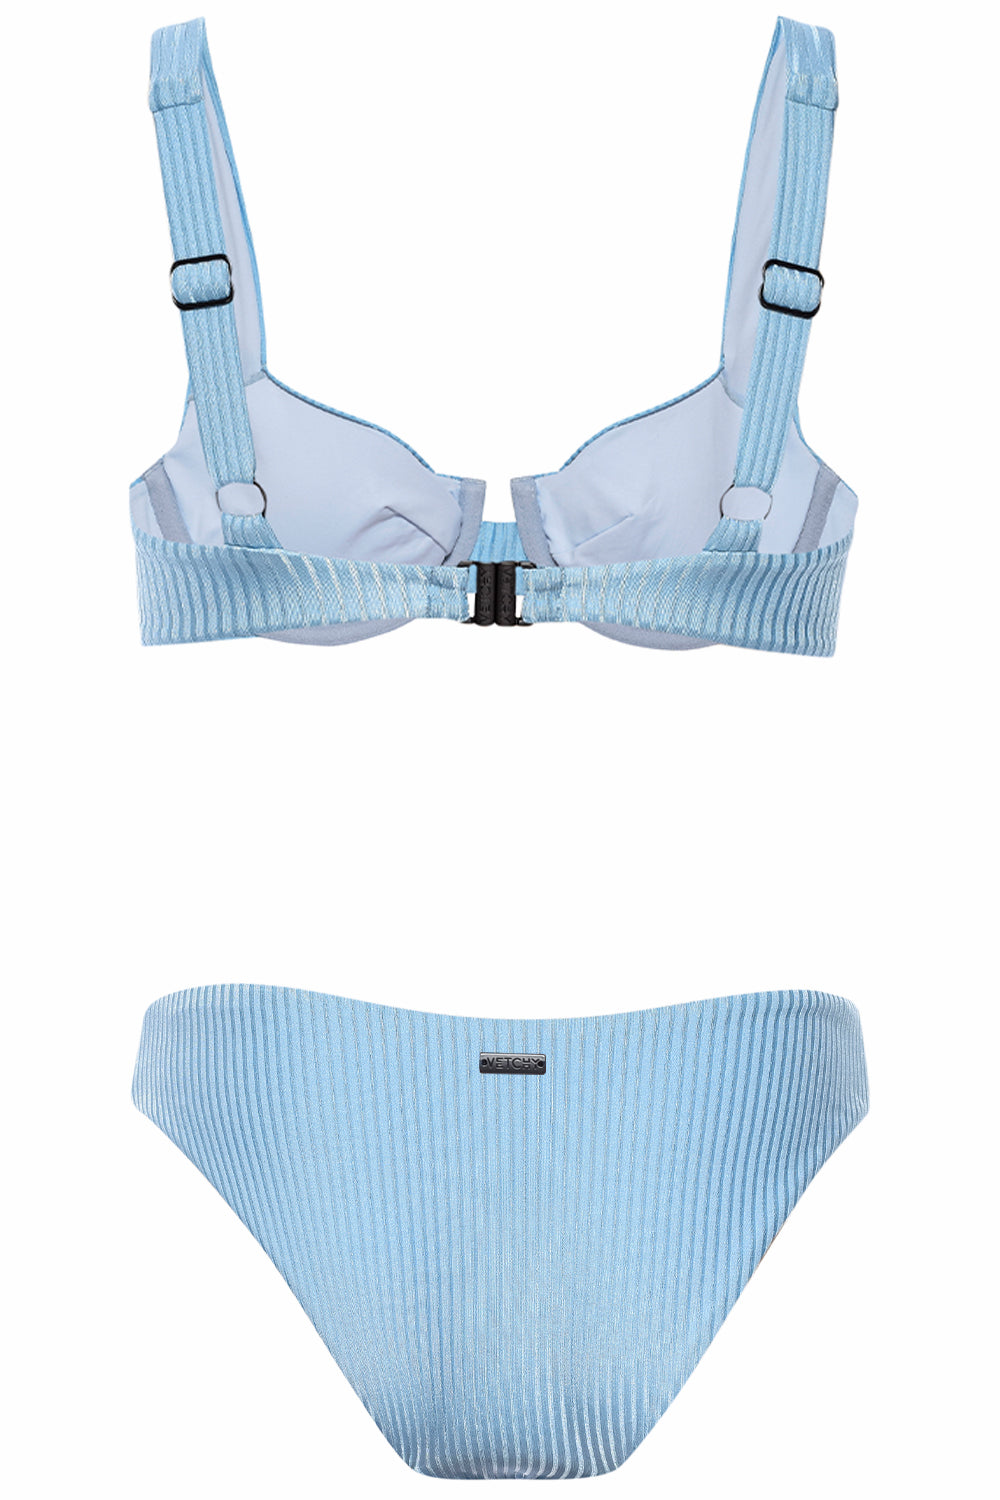 Laguna bikini baby blue ribbed set on a white background back view.